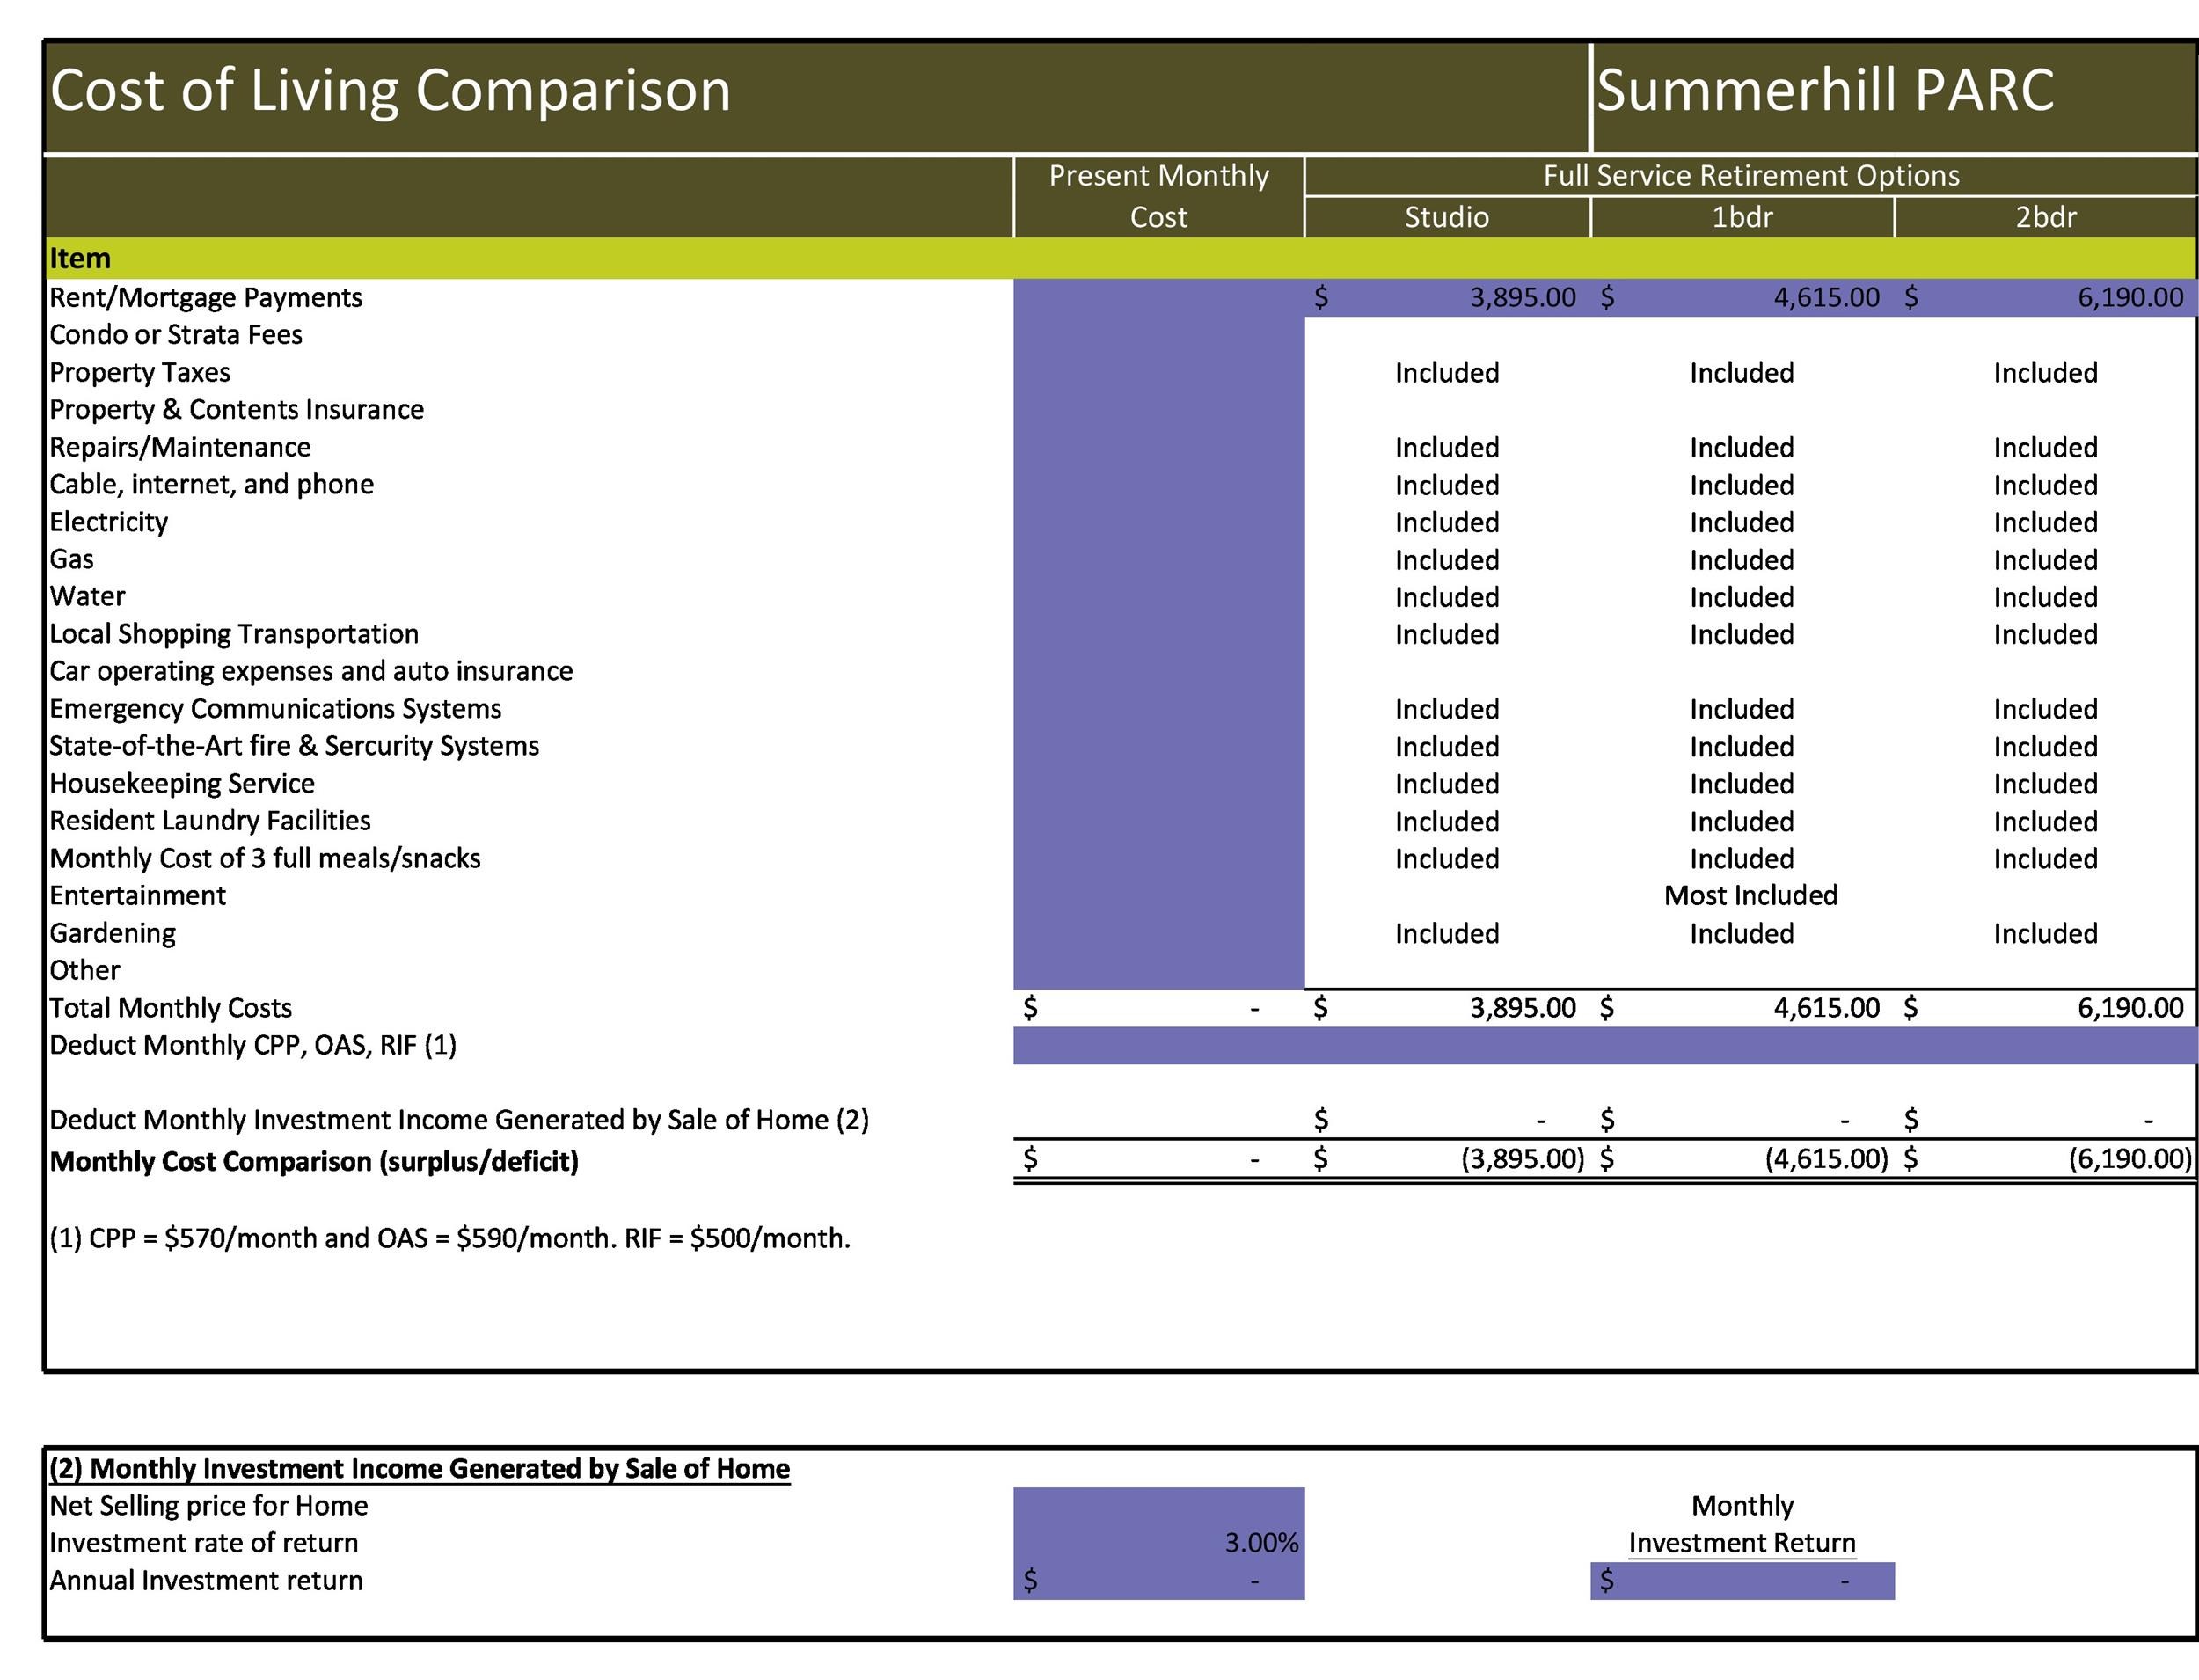 Price Comparison Chart Template Excel